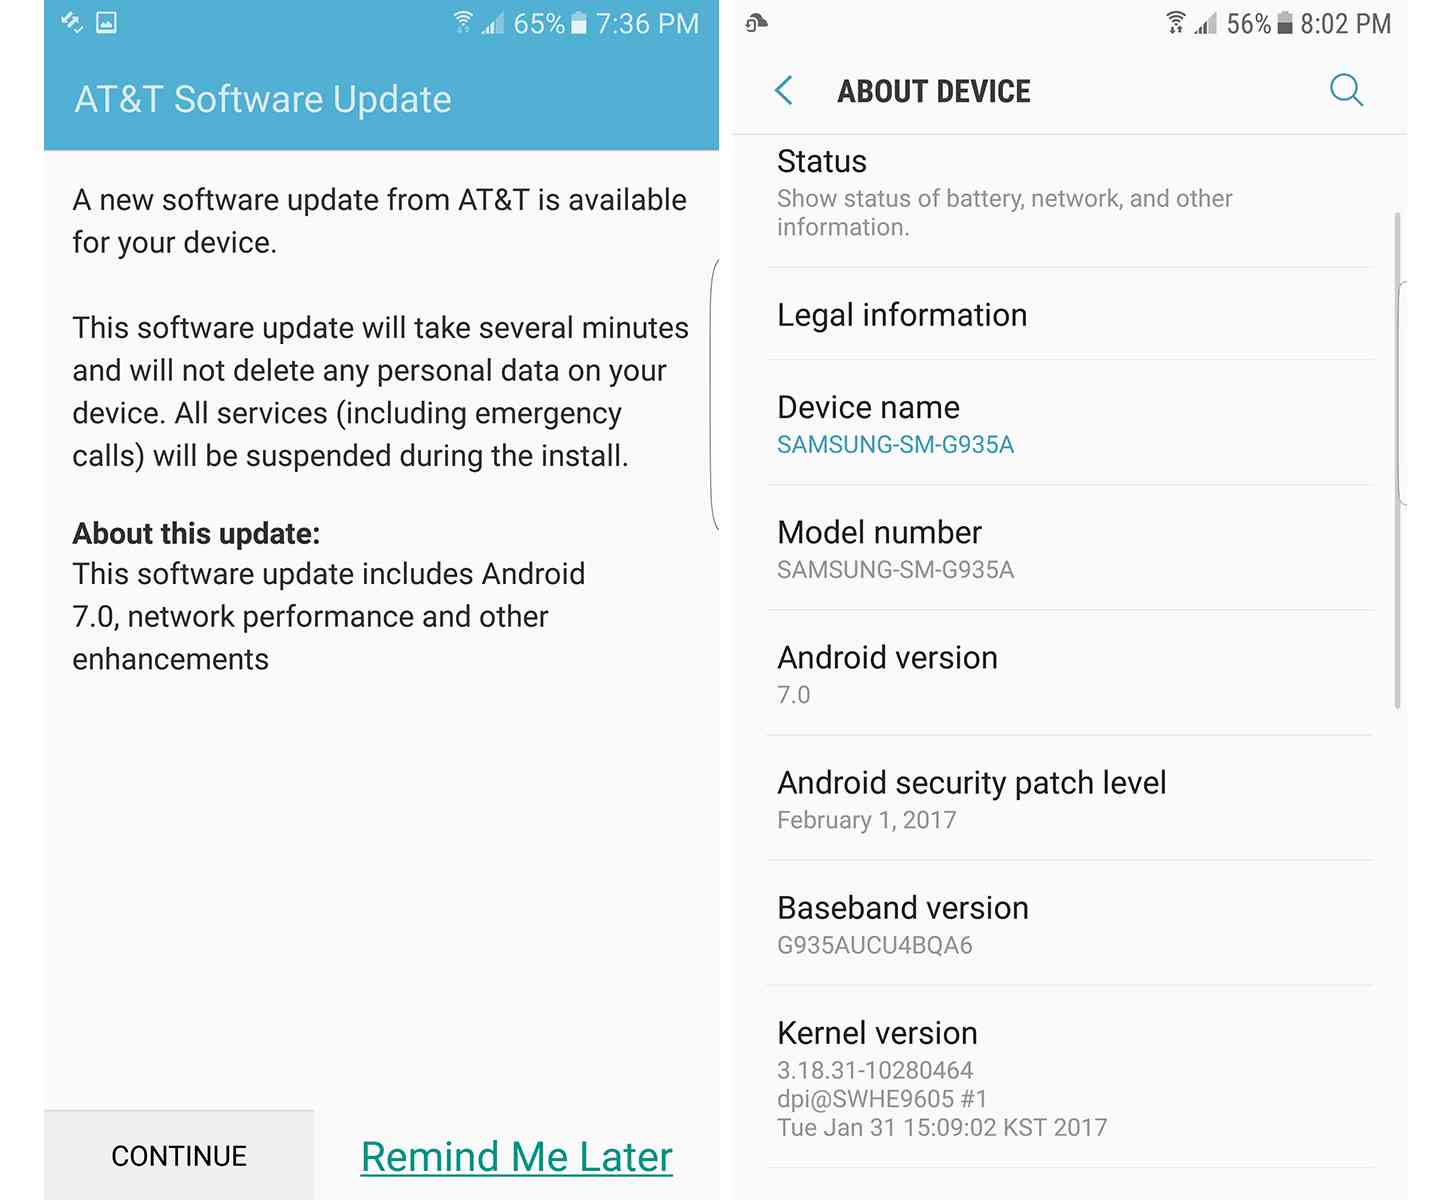 AT&T Samsung Galaxy S7 edge Android 7.0 Nougat update screenshots